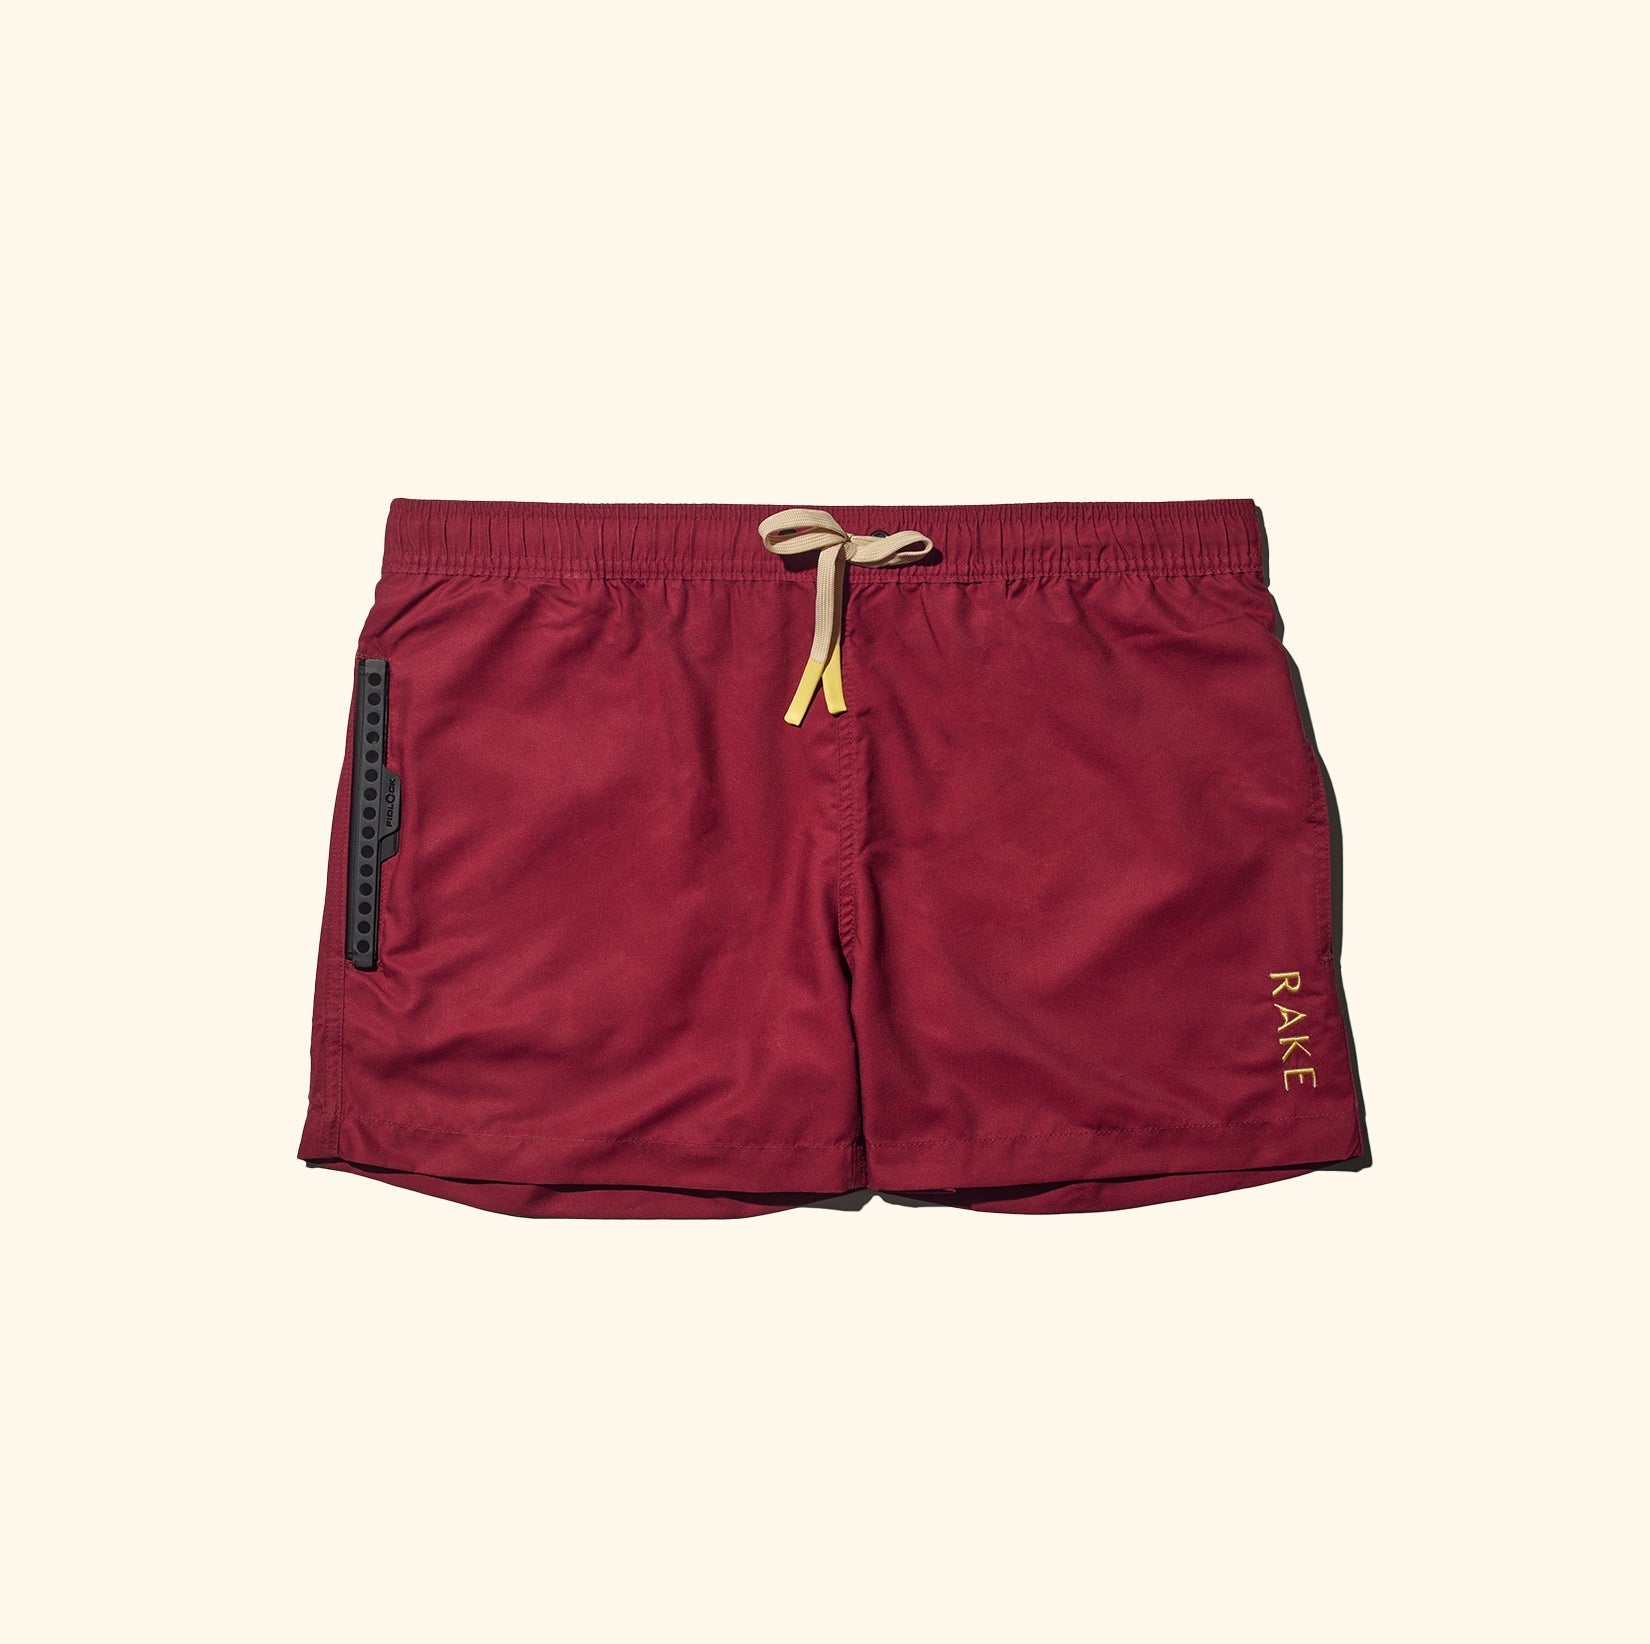 Waterproof swimming shorts -color cherry - Image front flat lay - by RAKE - Size xs till xxl - by RAKE XS